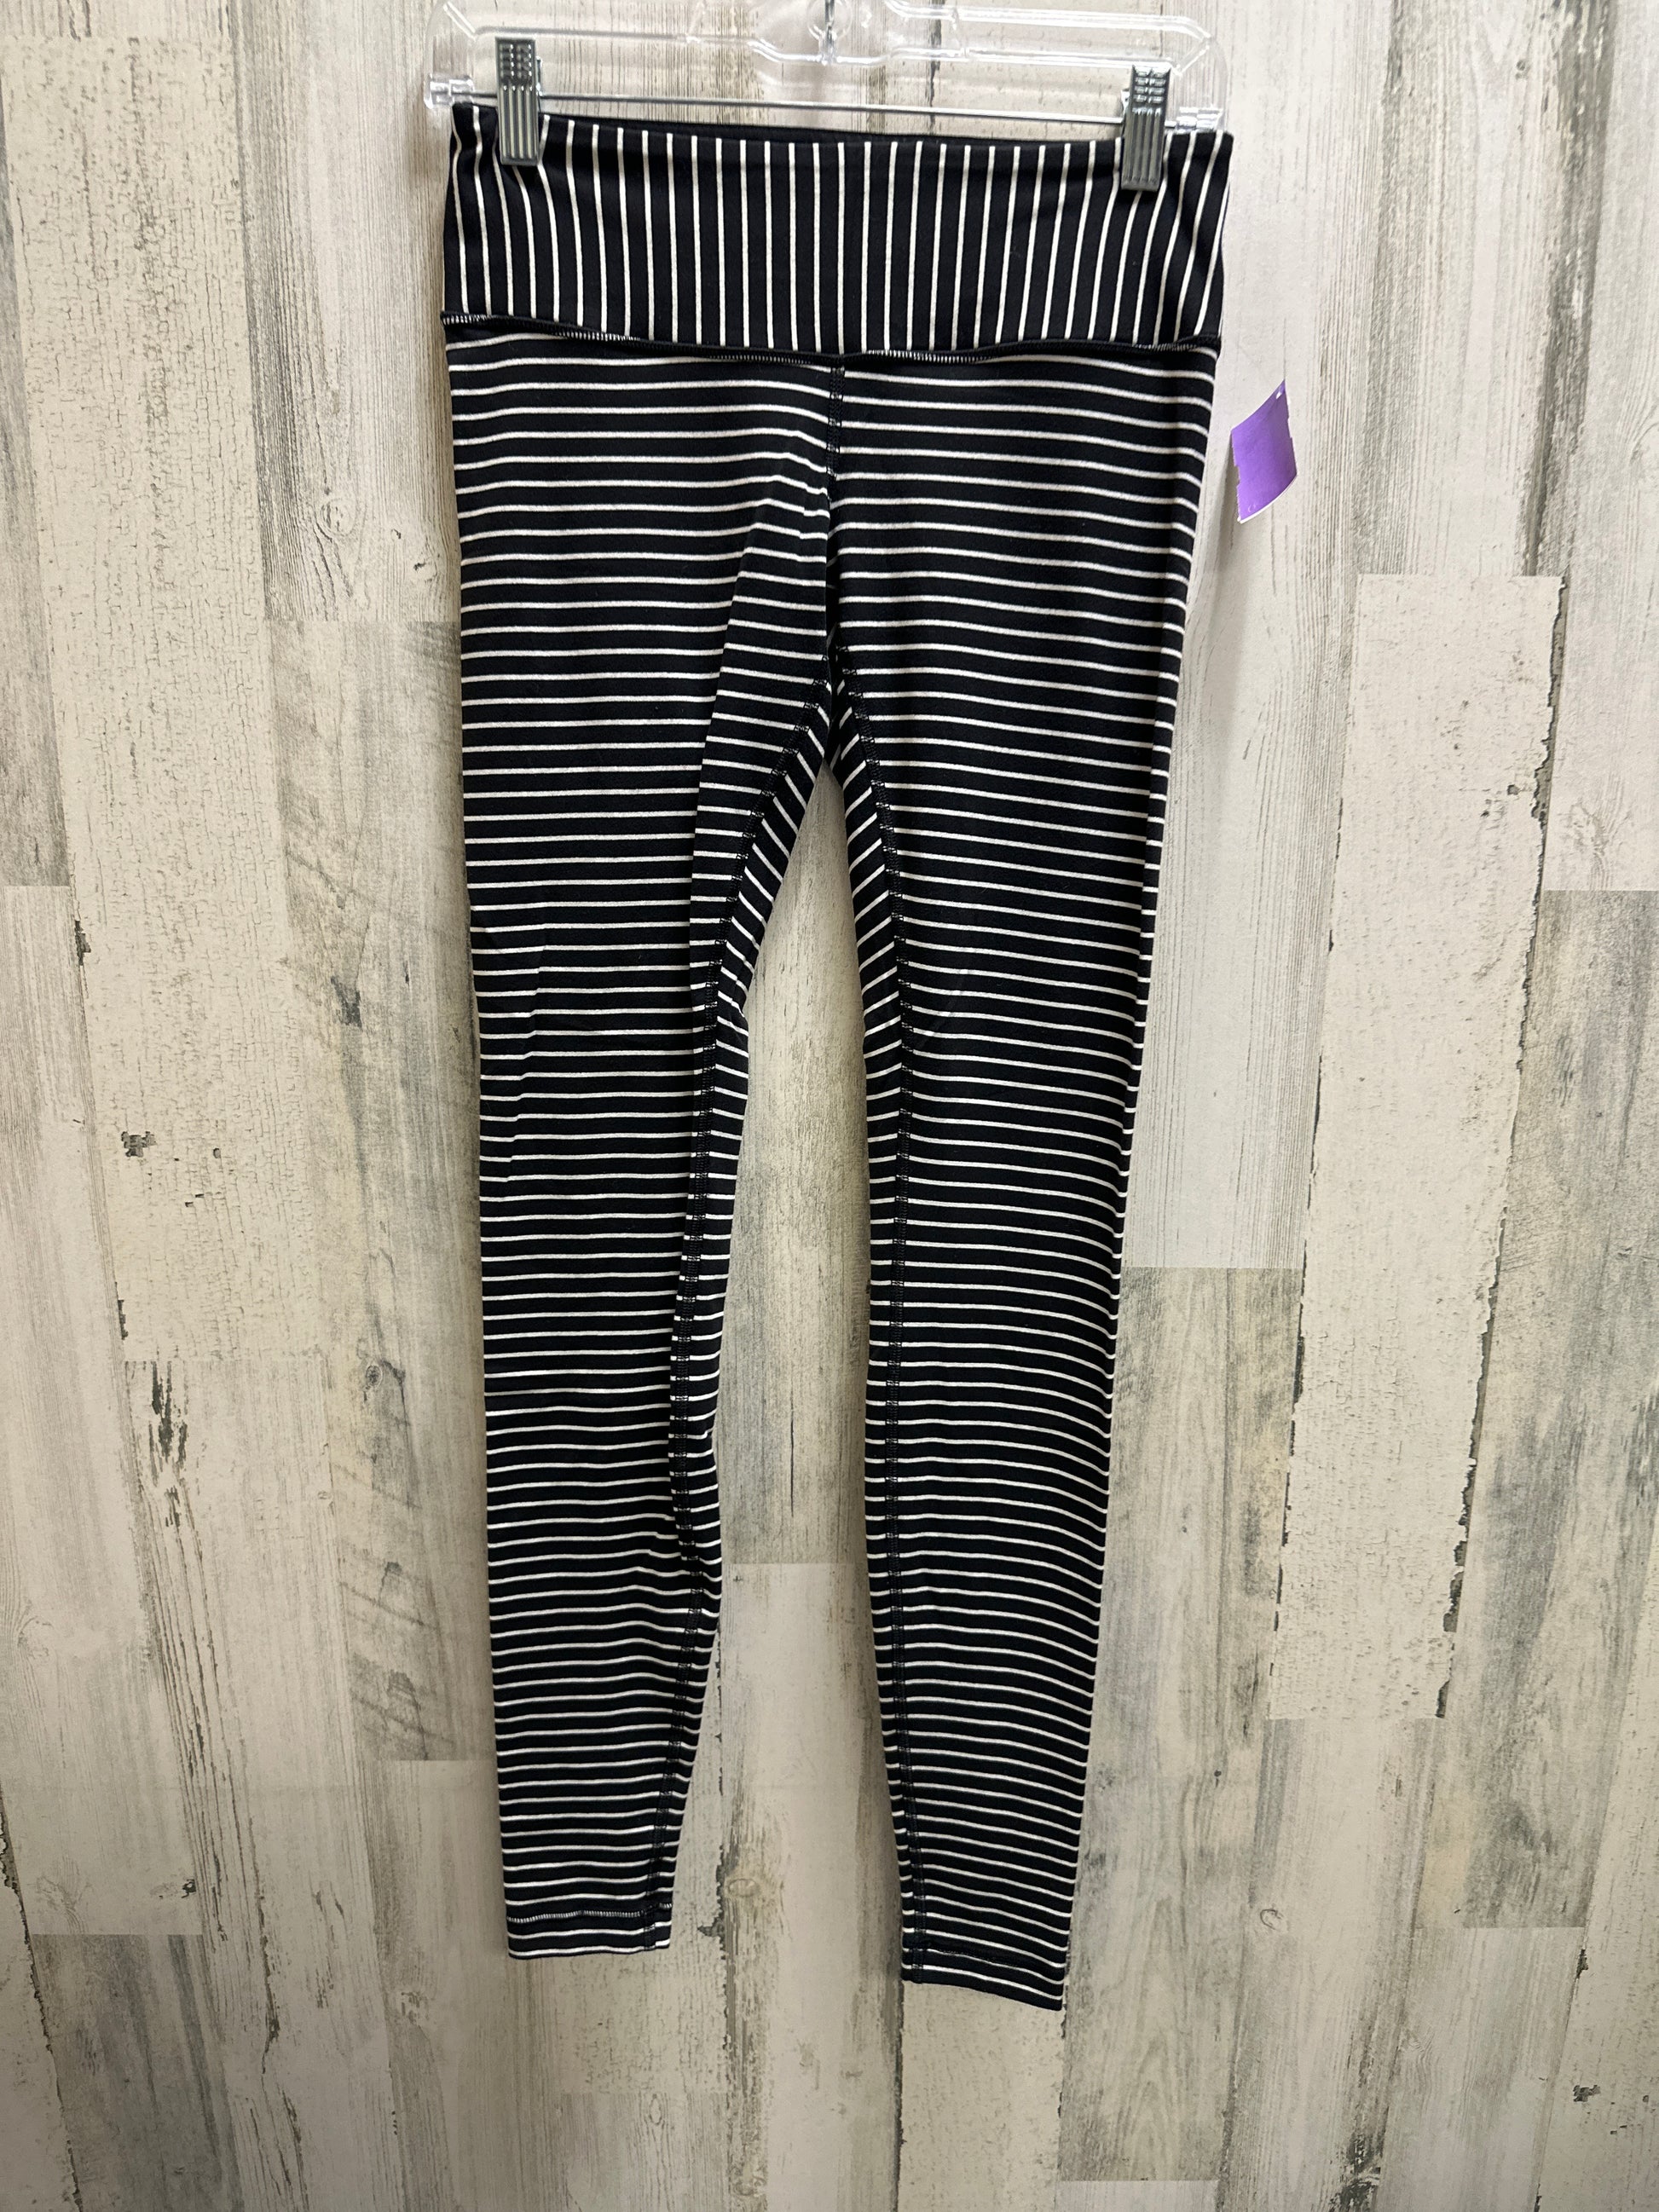 Striped Lululemon leggings, size 6